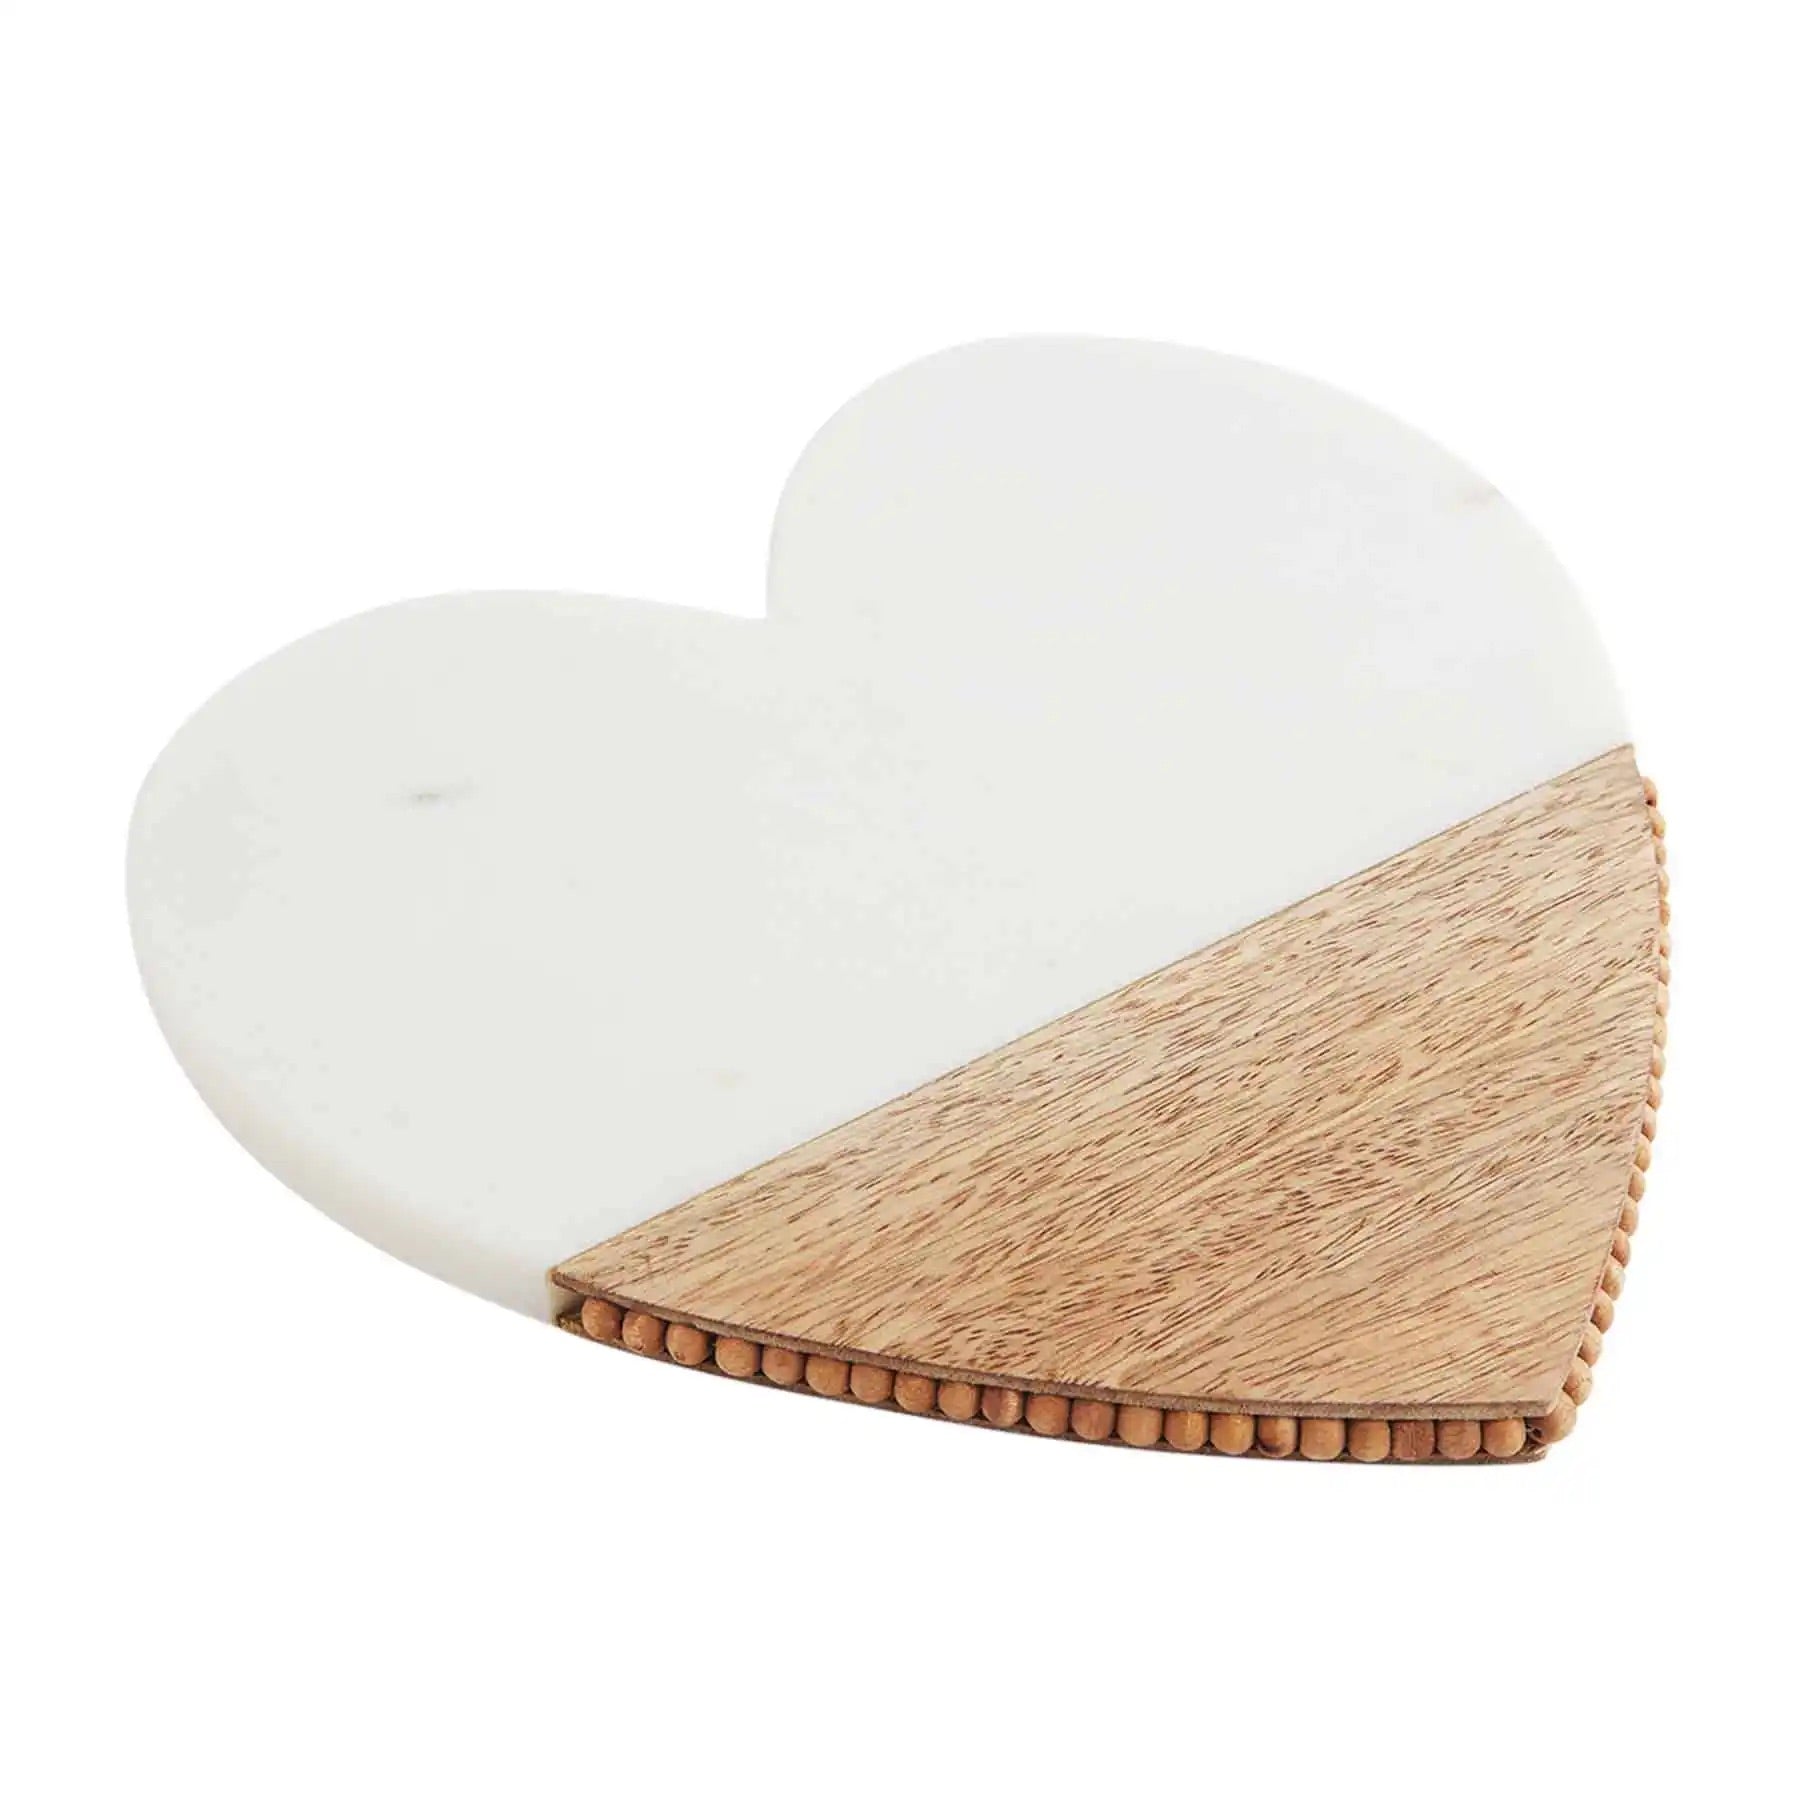 Mudpie Wood Board - Marble Small Heart